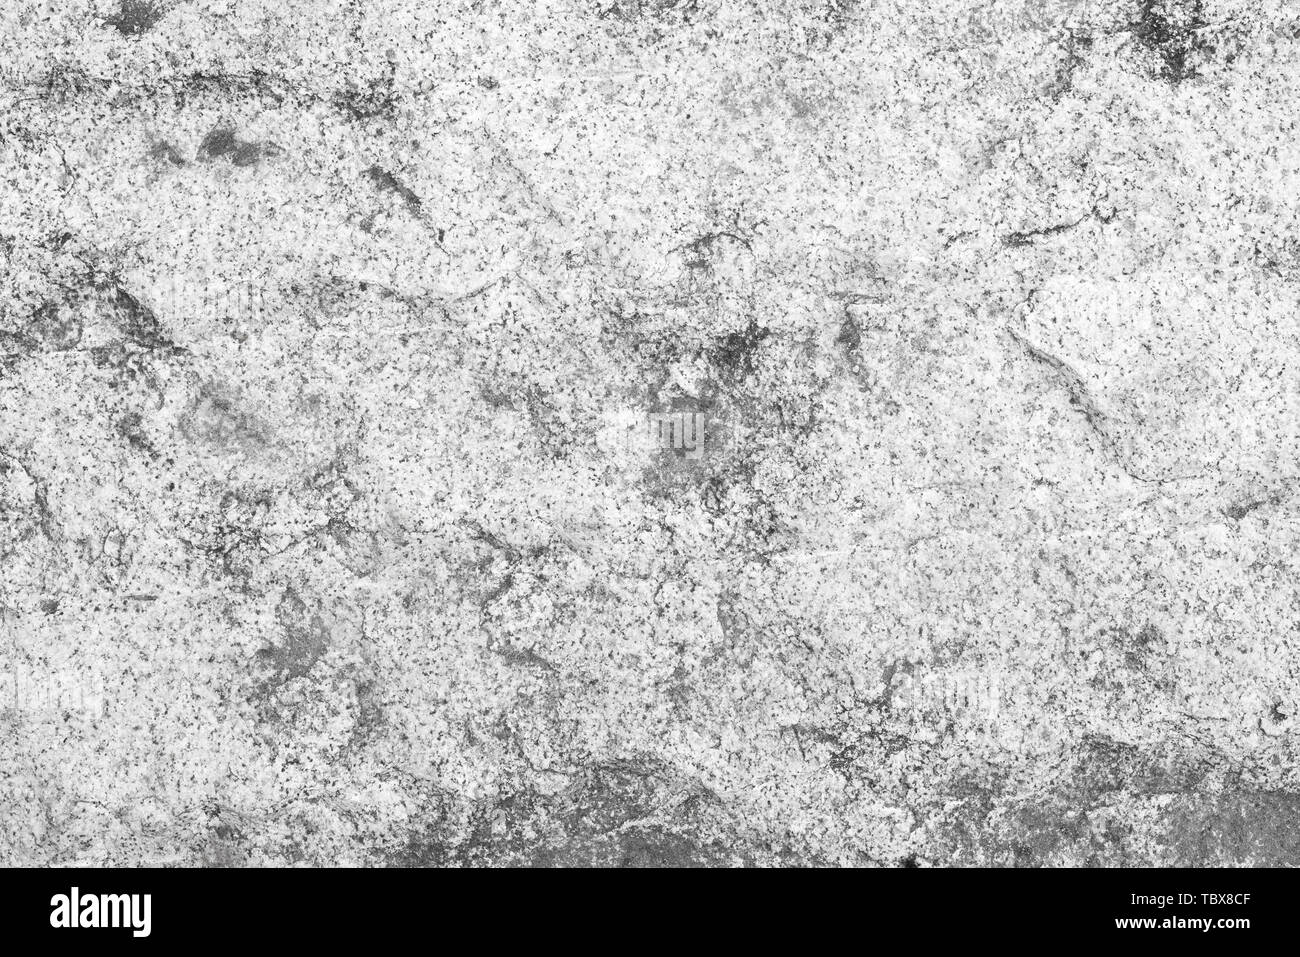 Rock texture background Stock Photo - Alamy